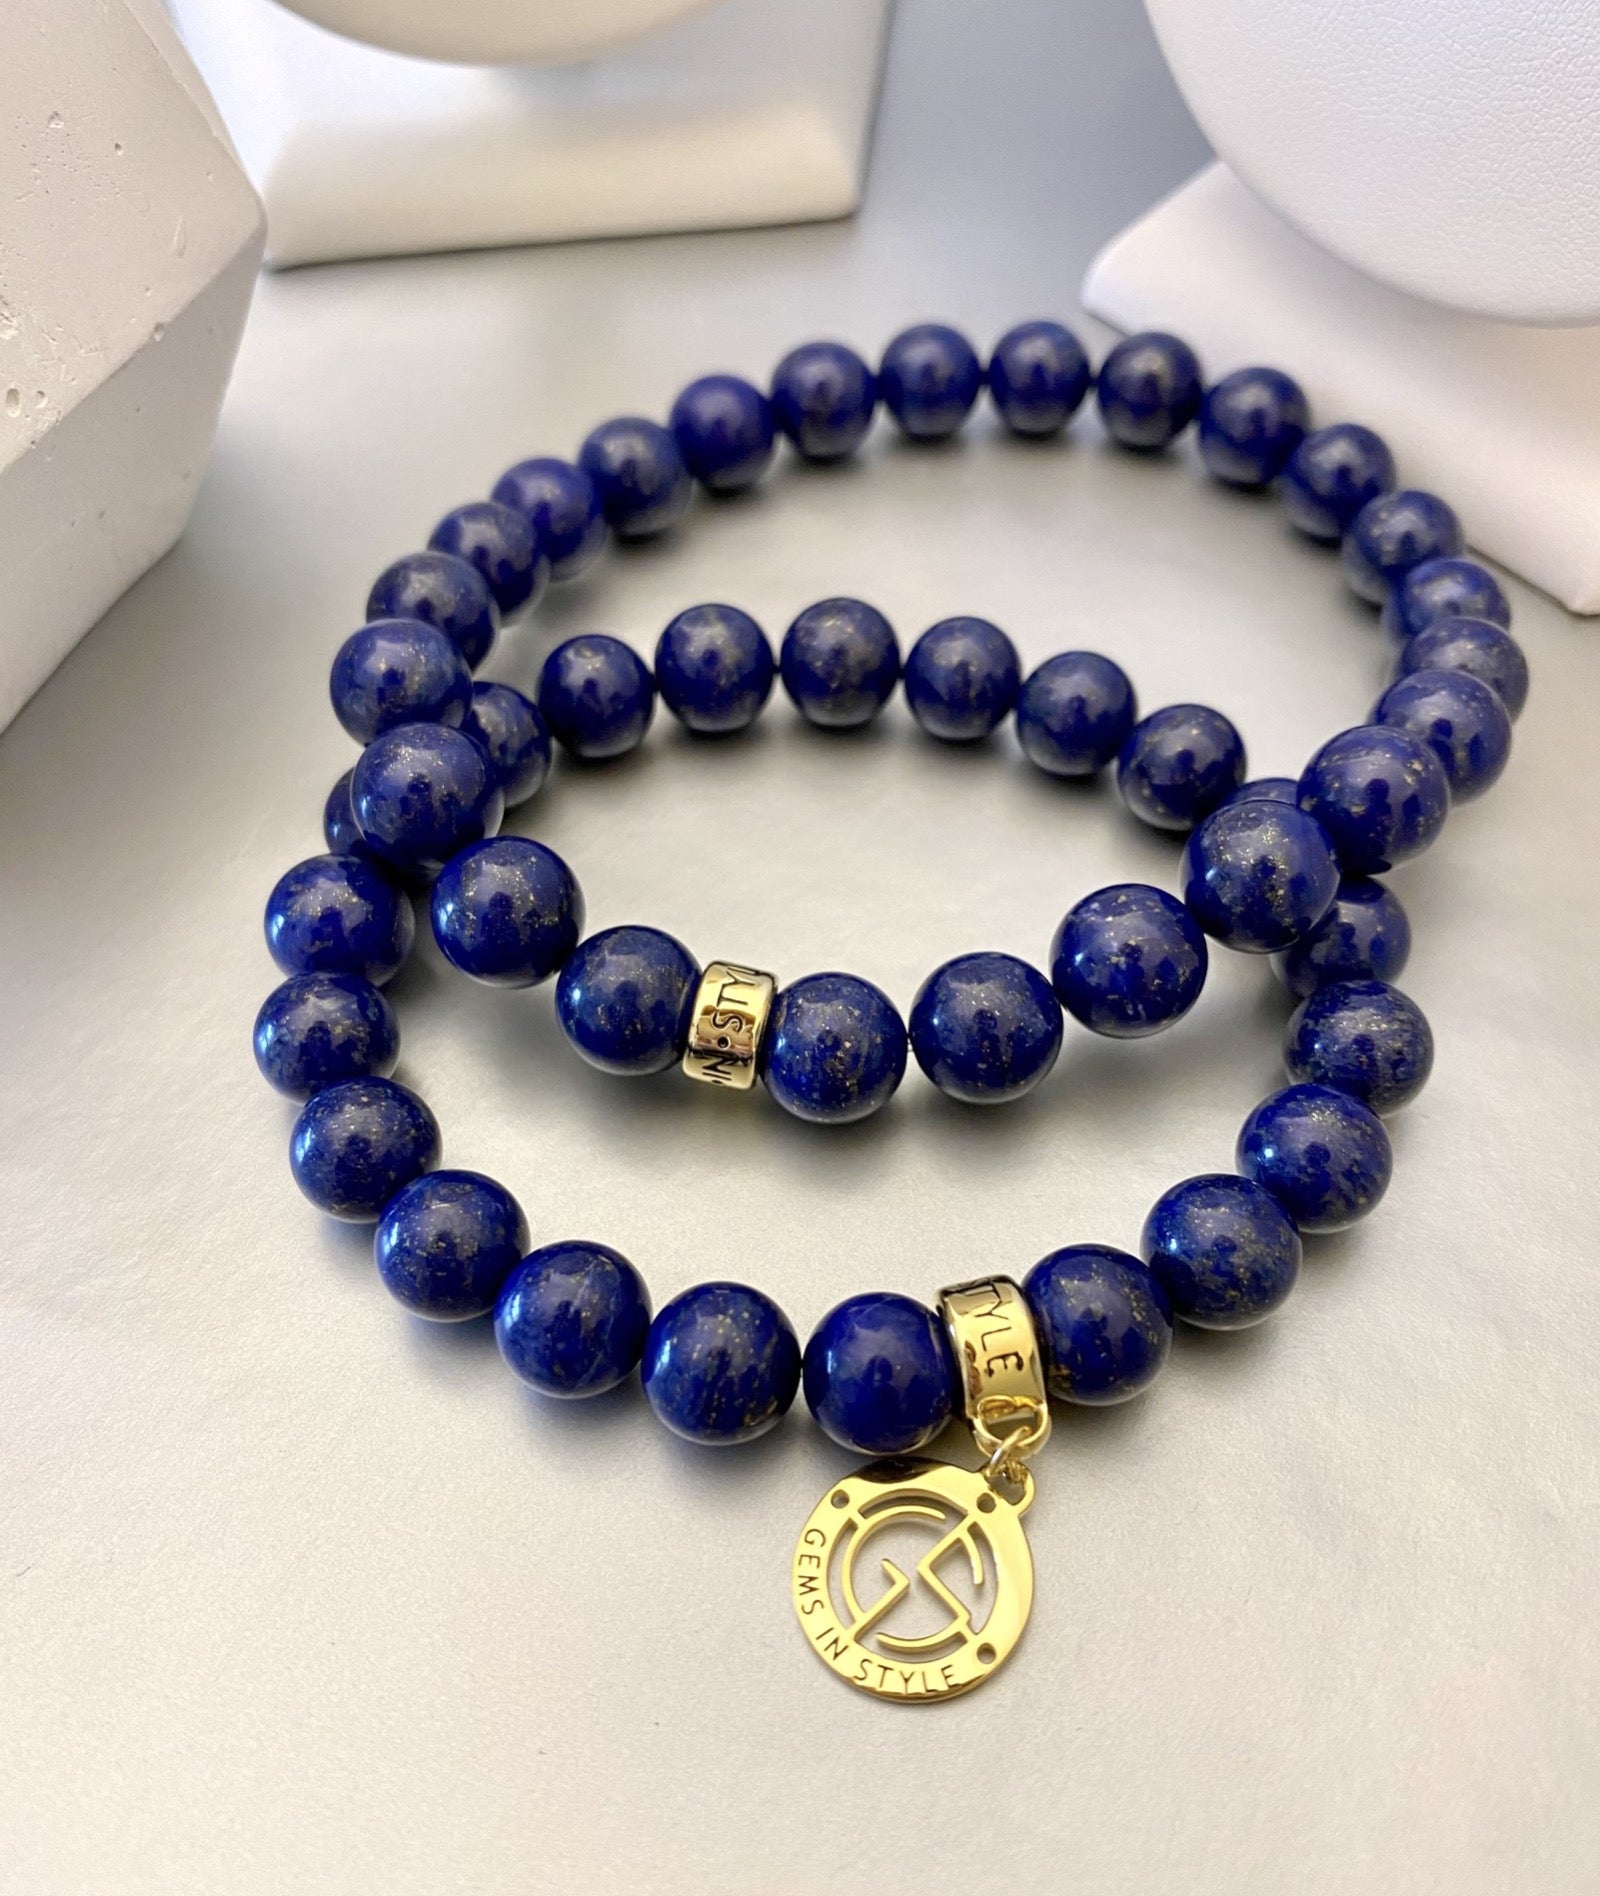 Amazon.com: Georgiadis 8mm Lapis Lazuli, African Jasper & Jade Gemstones  Bracelet, Crystal Healing Stones, Self-Confidence, Balancing Energy,  Prosperity, Abundance, For Men, Women, Gift. (Multi - 7.30